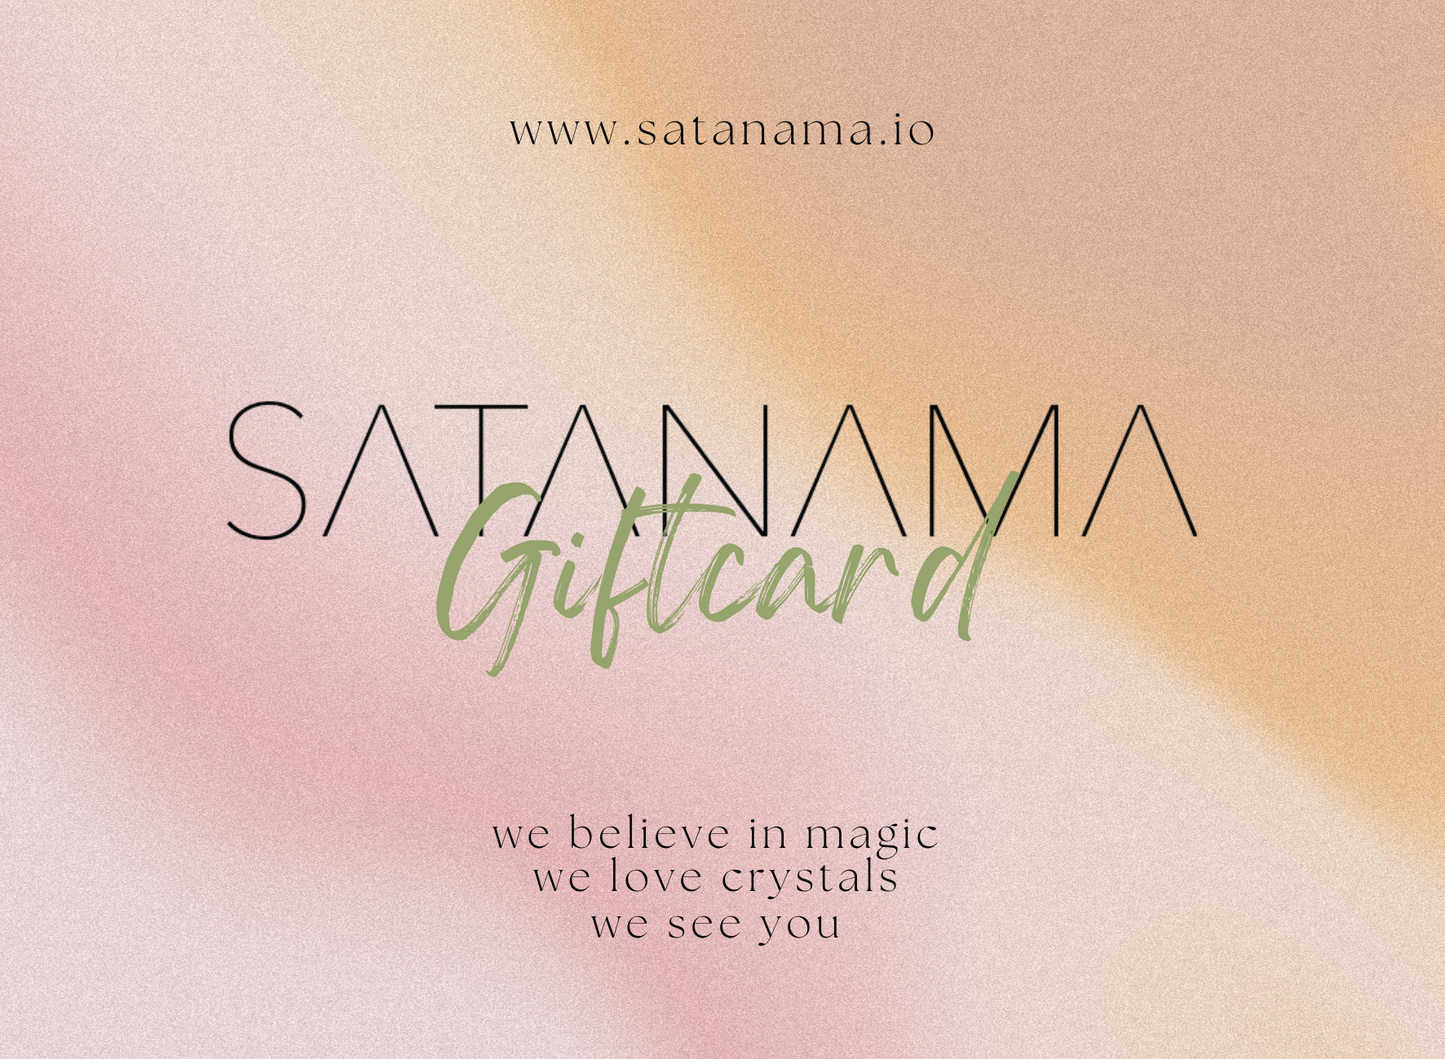 SATANAMA GIFT CARD